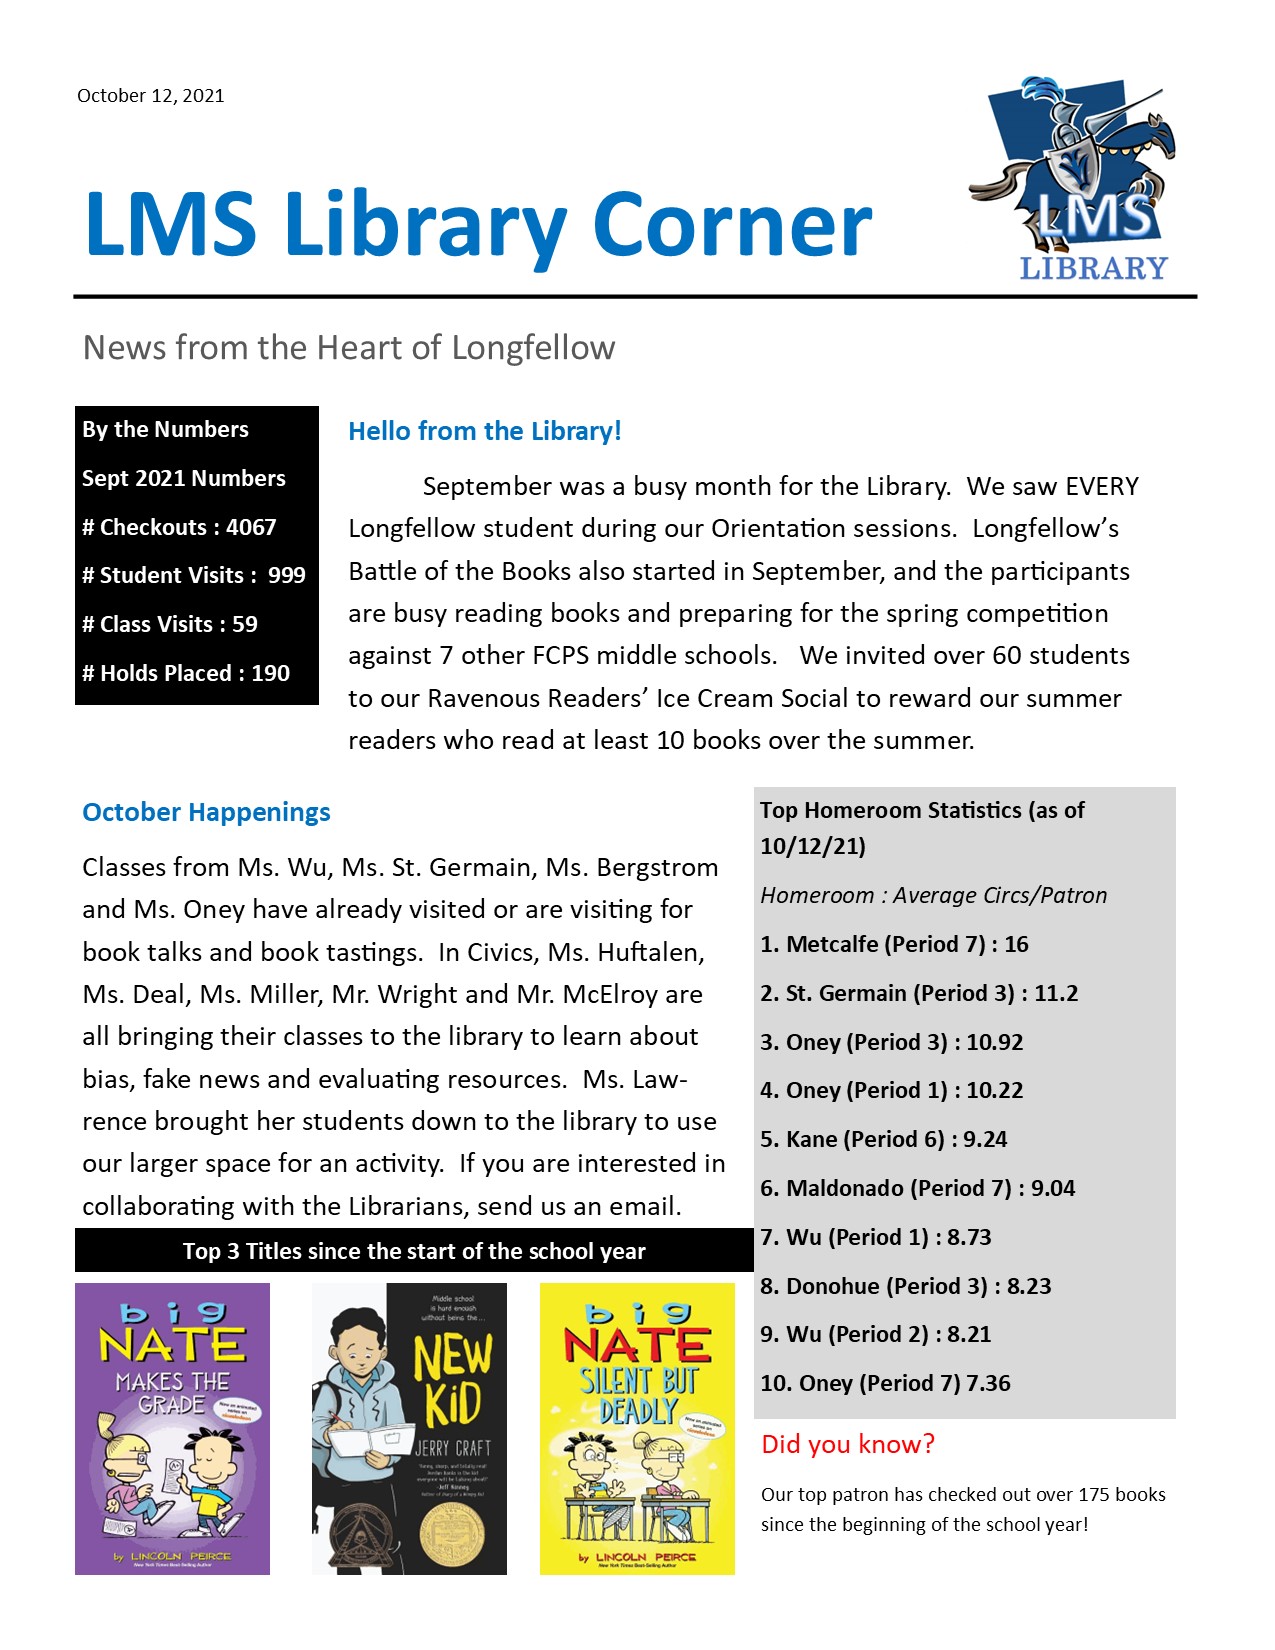 October LMS Library newsletter